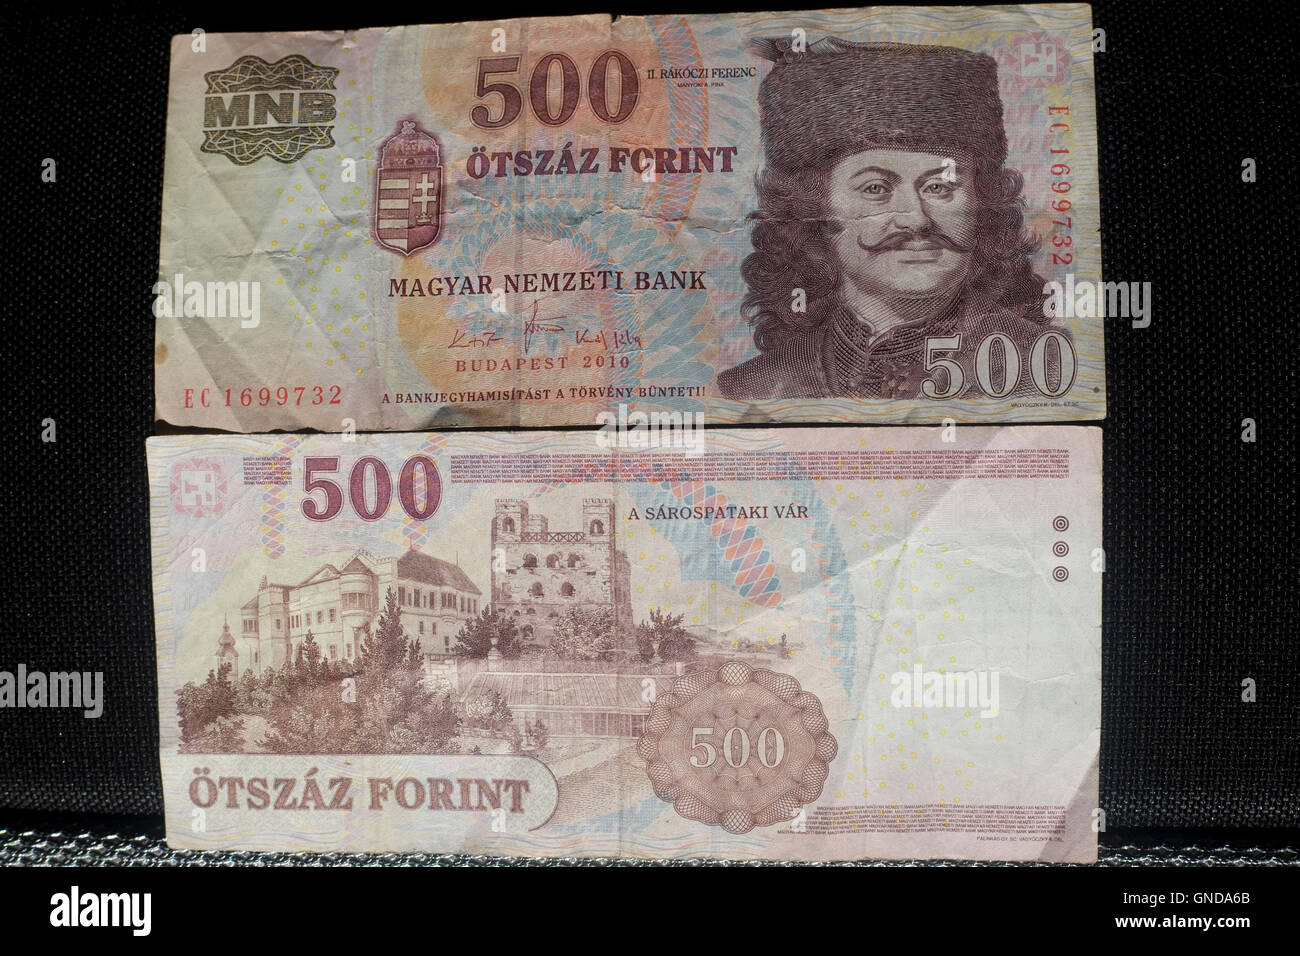 Hungarian National Bank 500 Forint Notes Stock Photo - Alamy